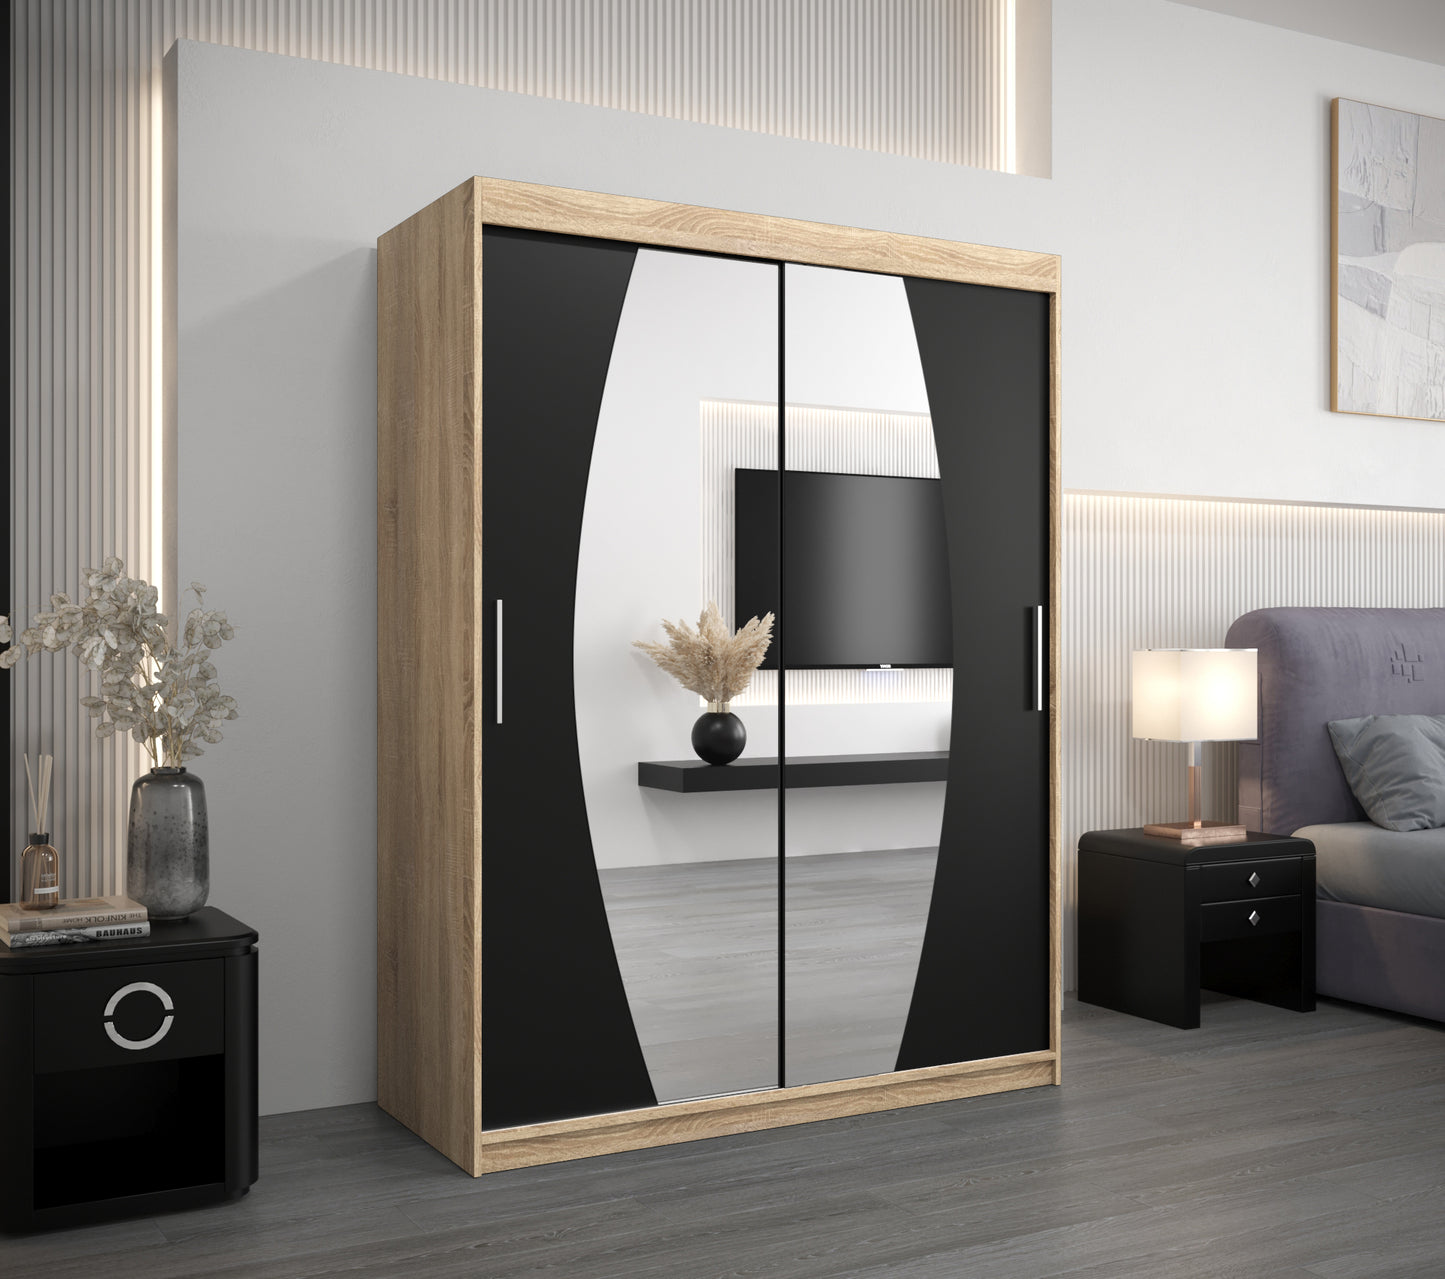 ECLIPTO - Wardrobe Sliding Doors Mirrors Colour Combinations Drawers Optional >150cm x 200cm<